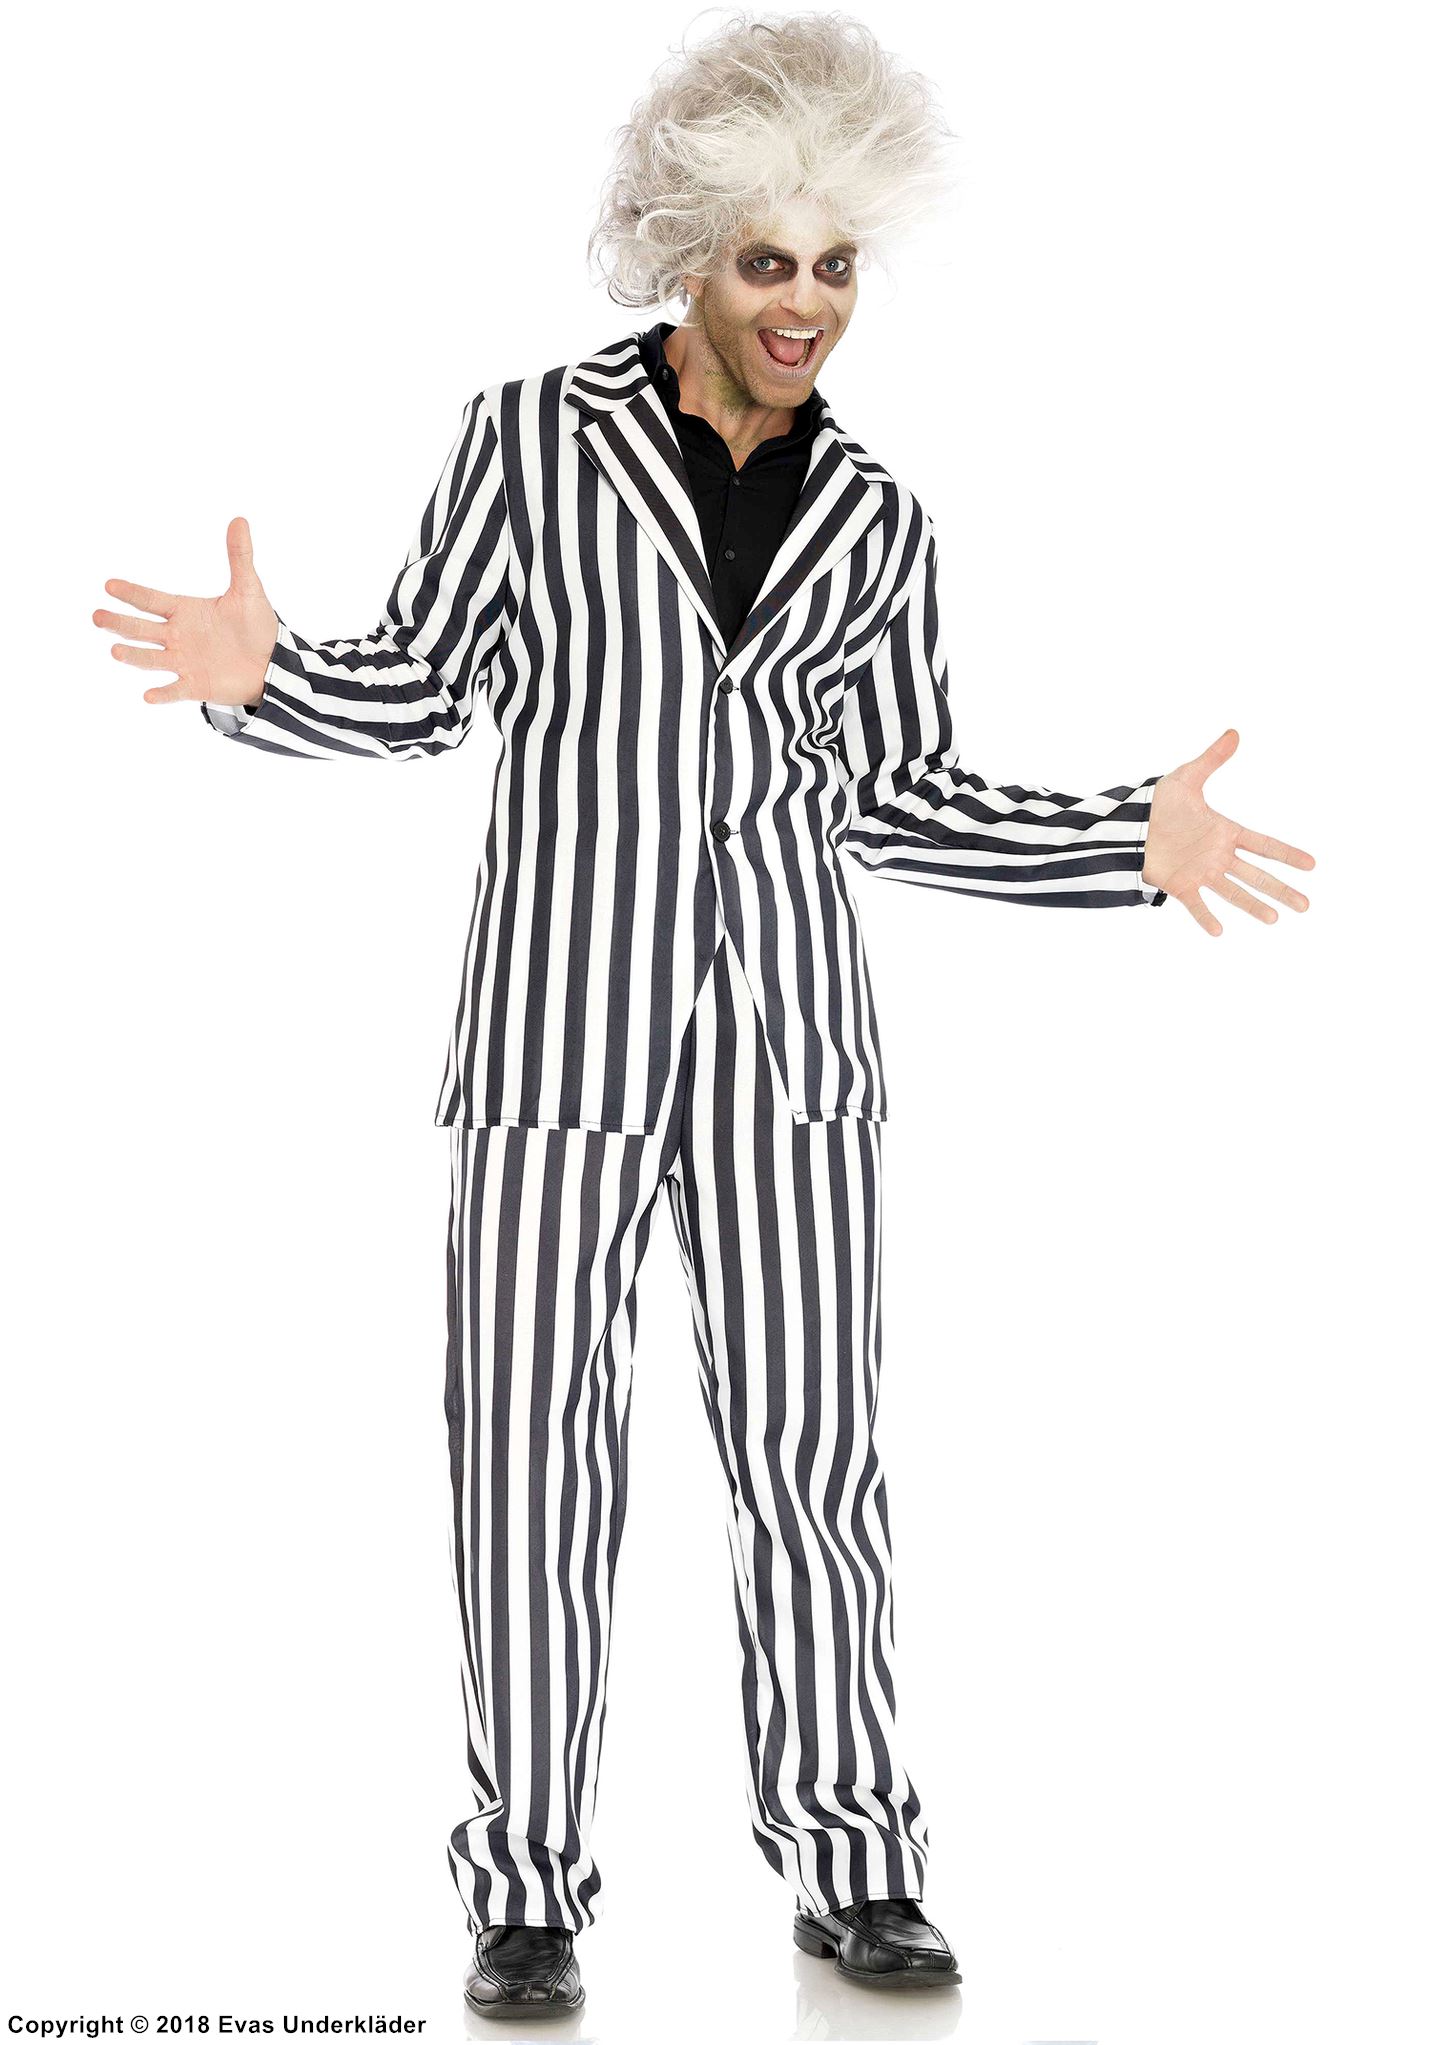 Beetlejuice, costume top and pants, vertical stripes